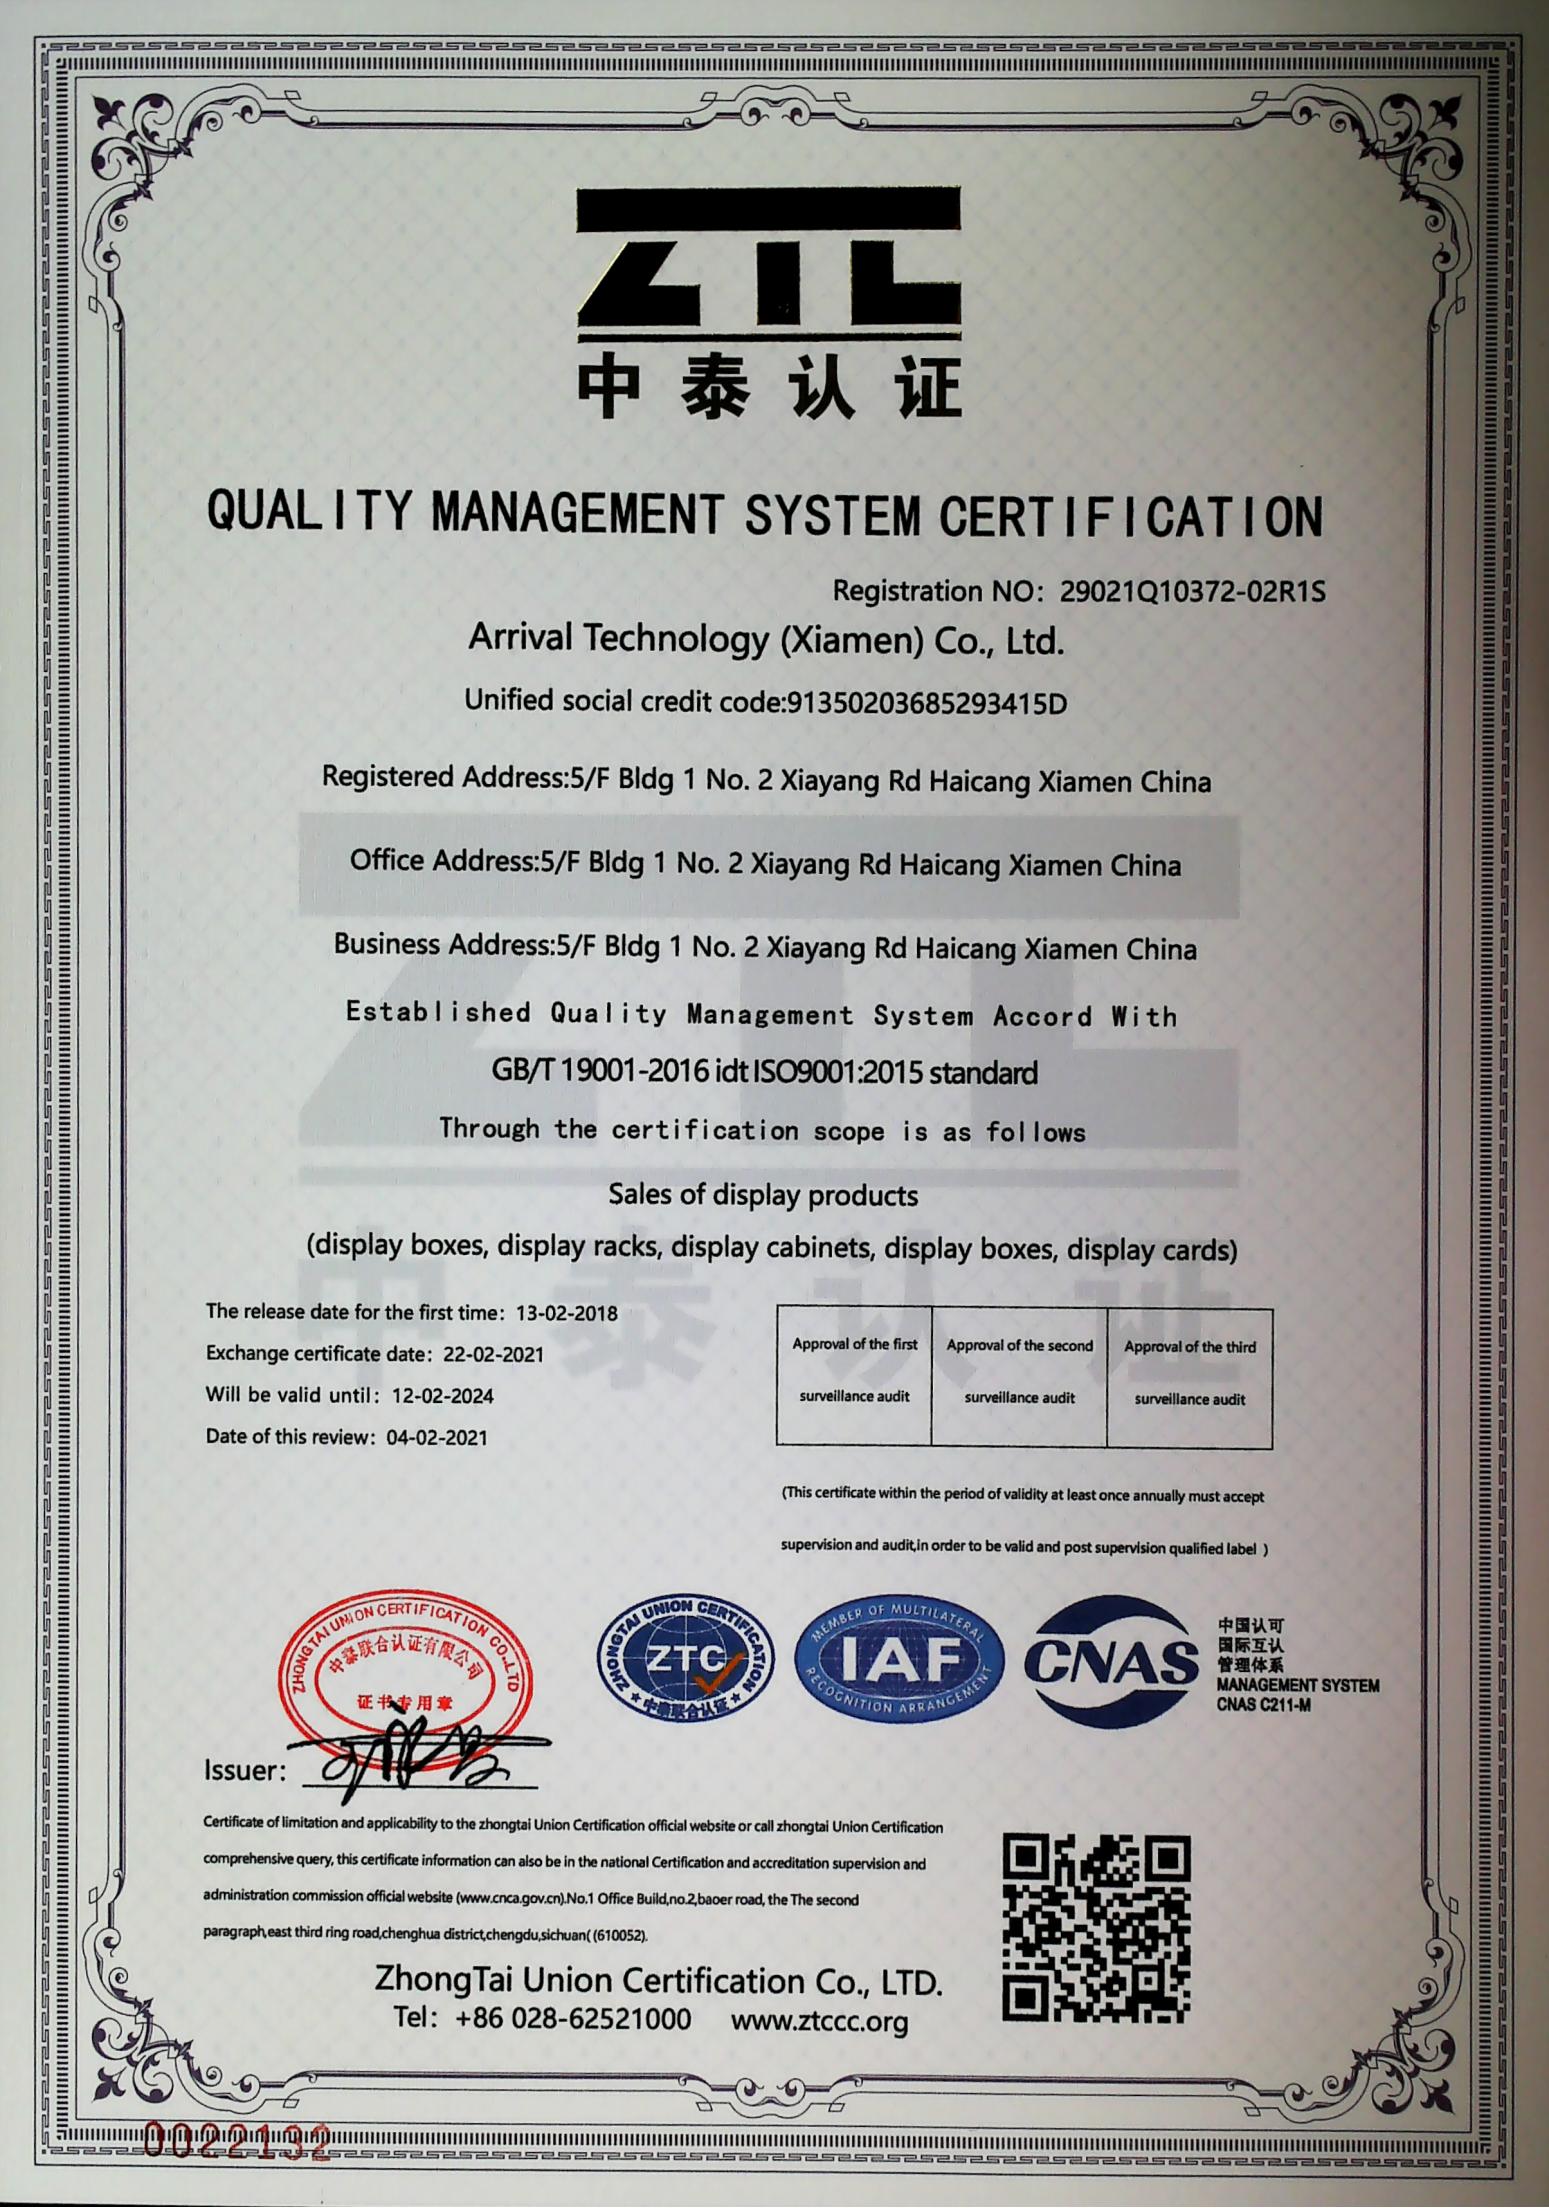 ISO-certificering